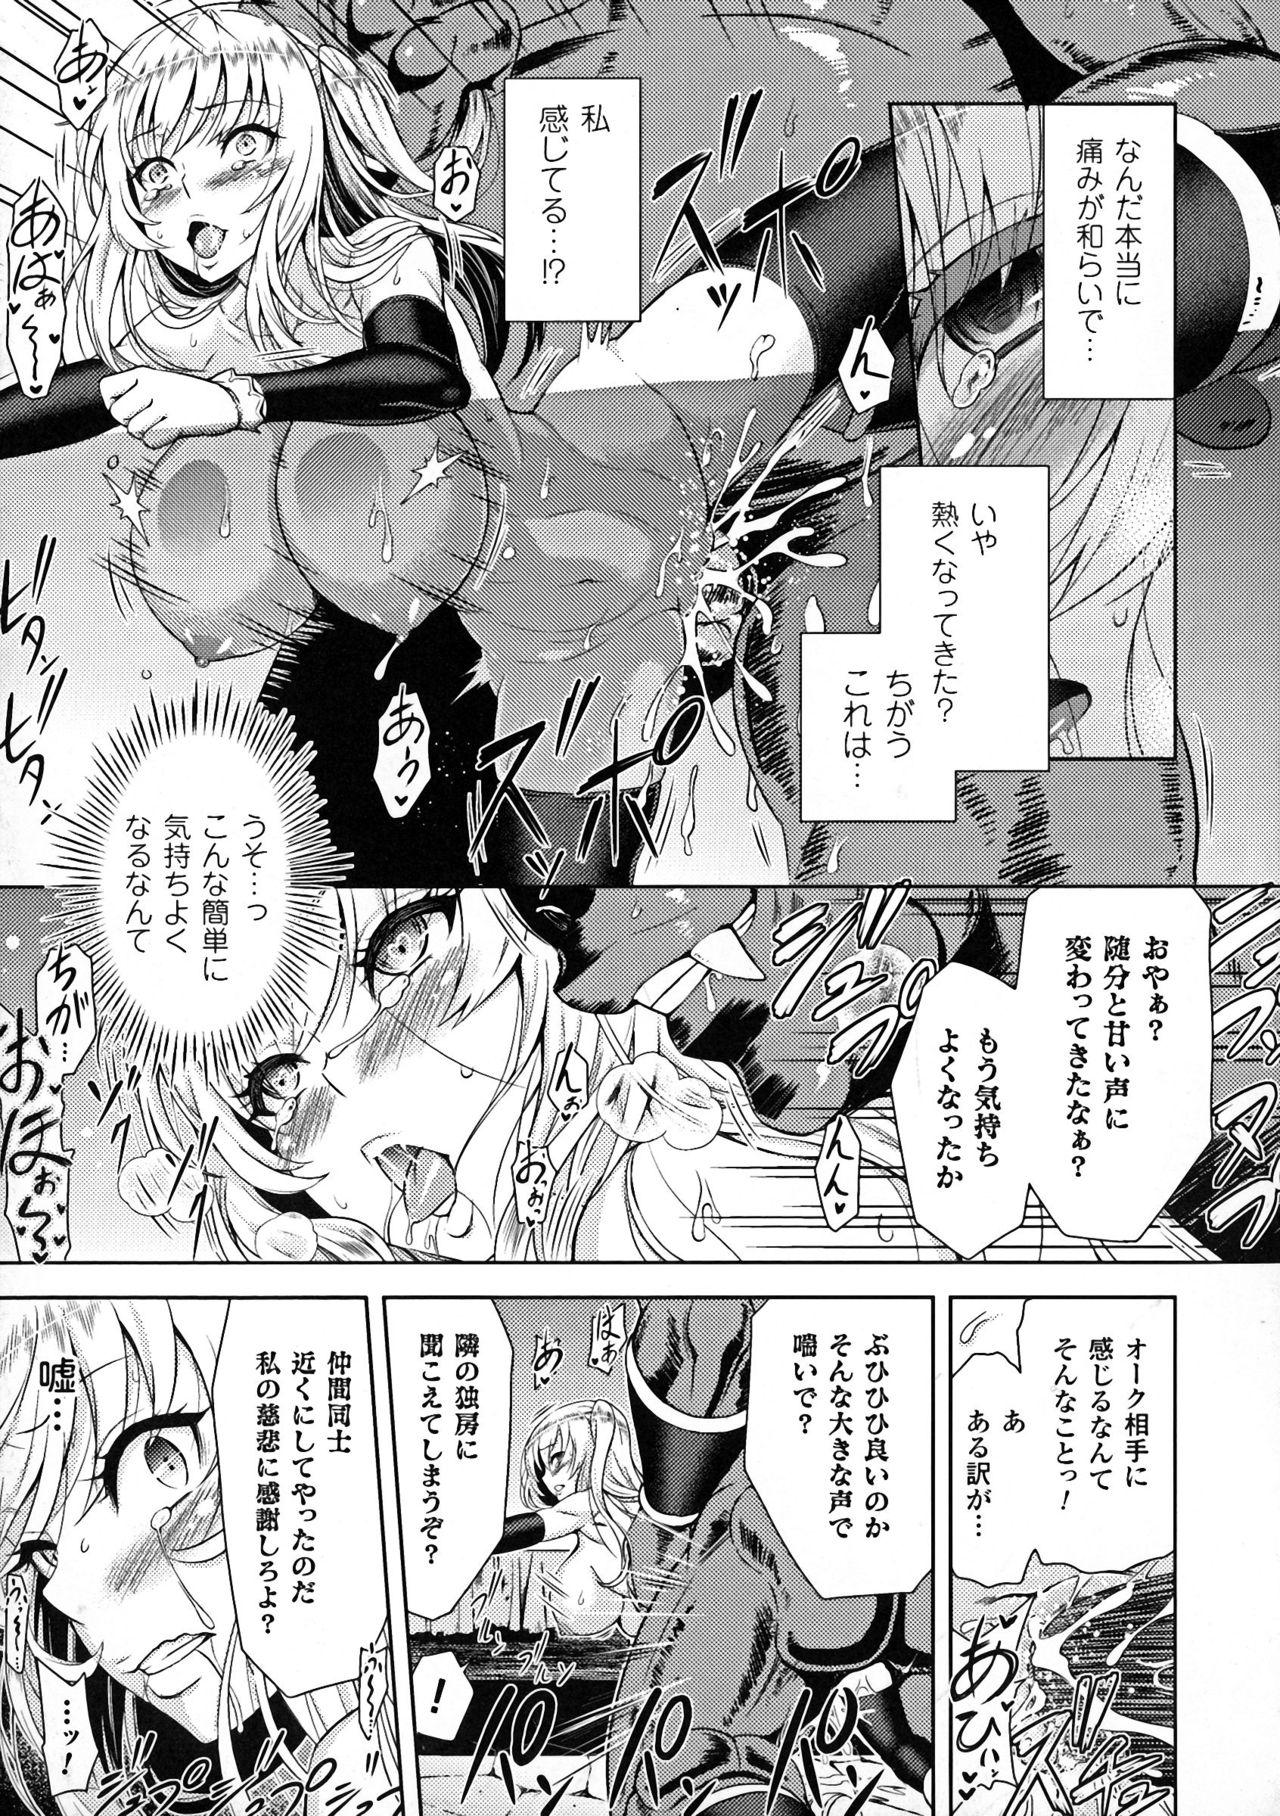 Seigi no Heroine Kangoku File DX Vol. 7 22